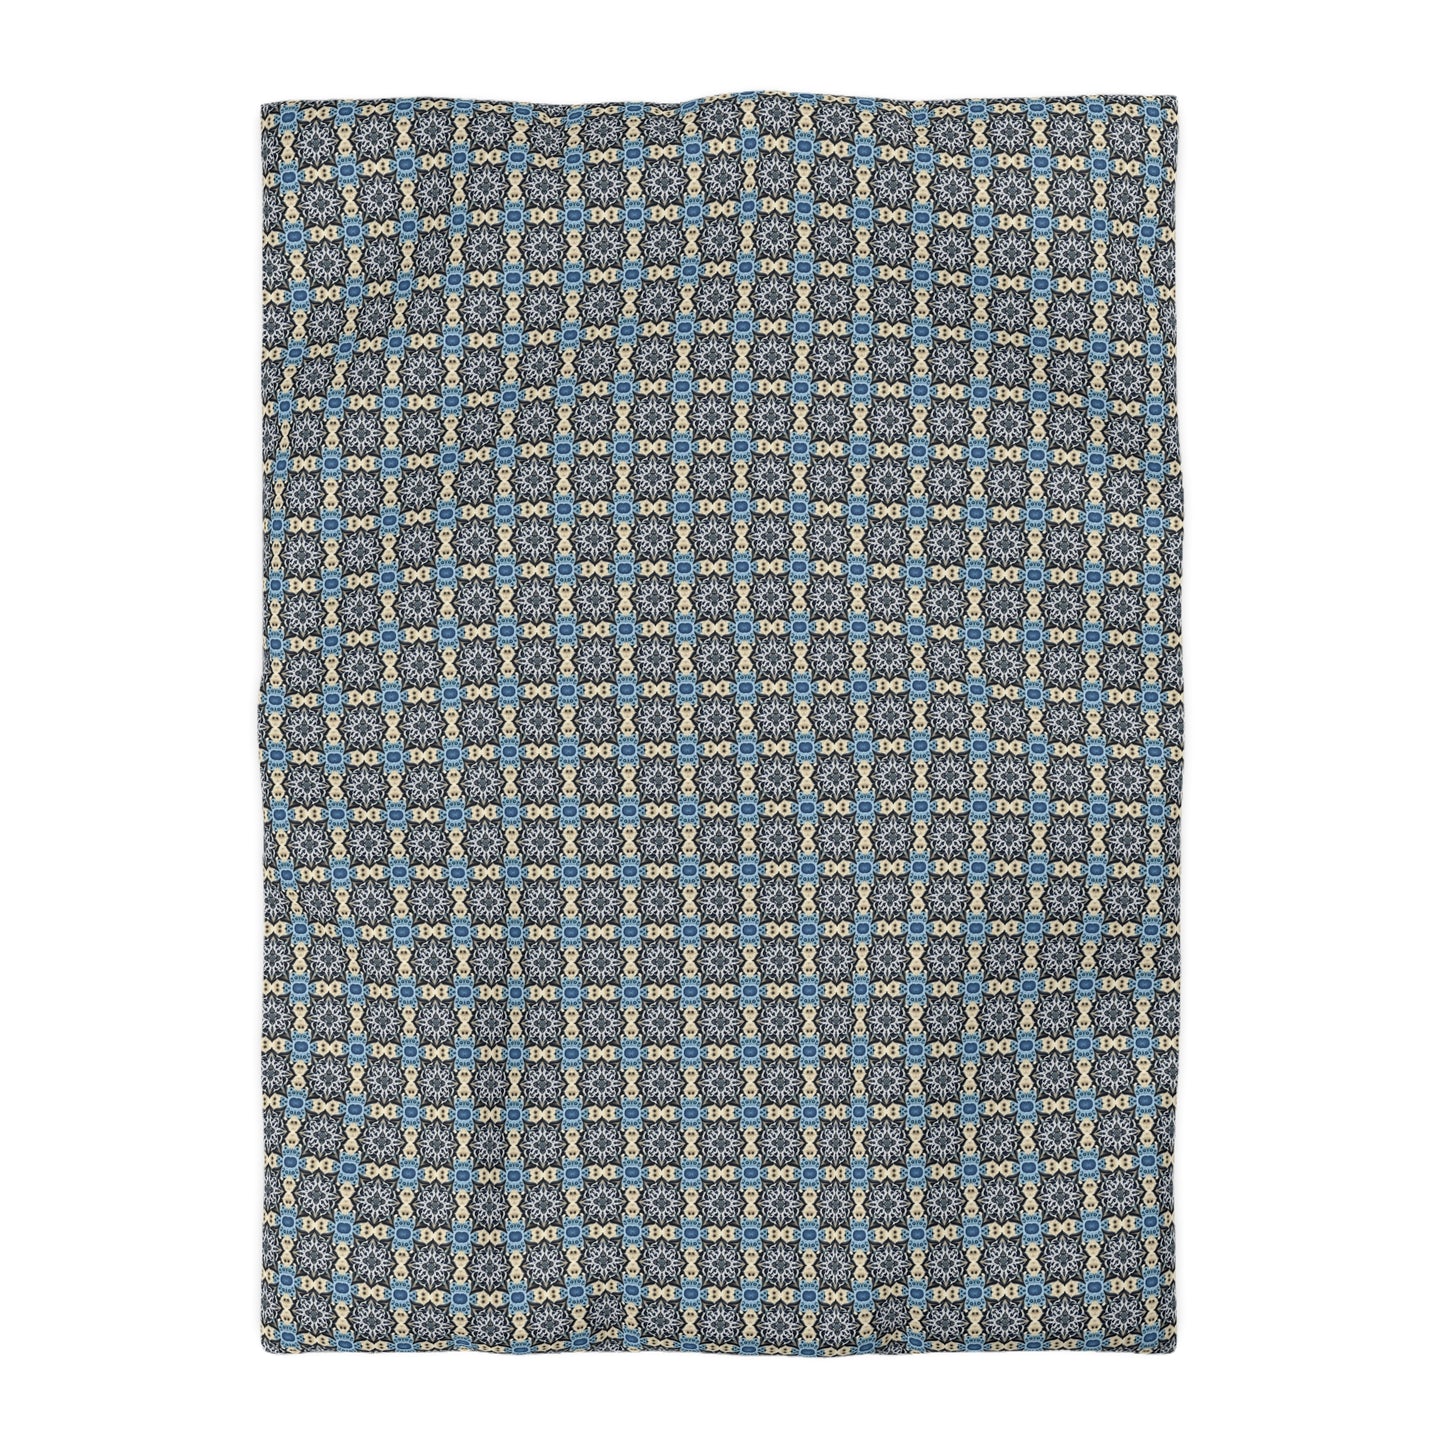 Morrocan Blue Microfiber Duvet Cover